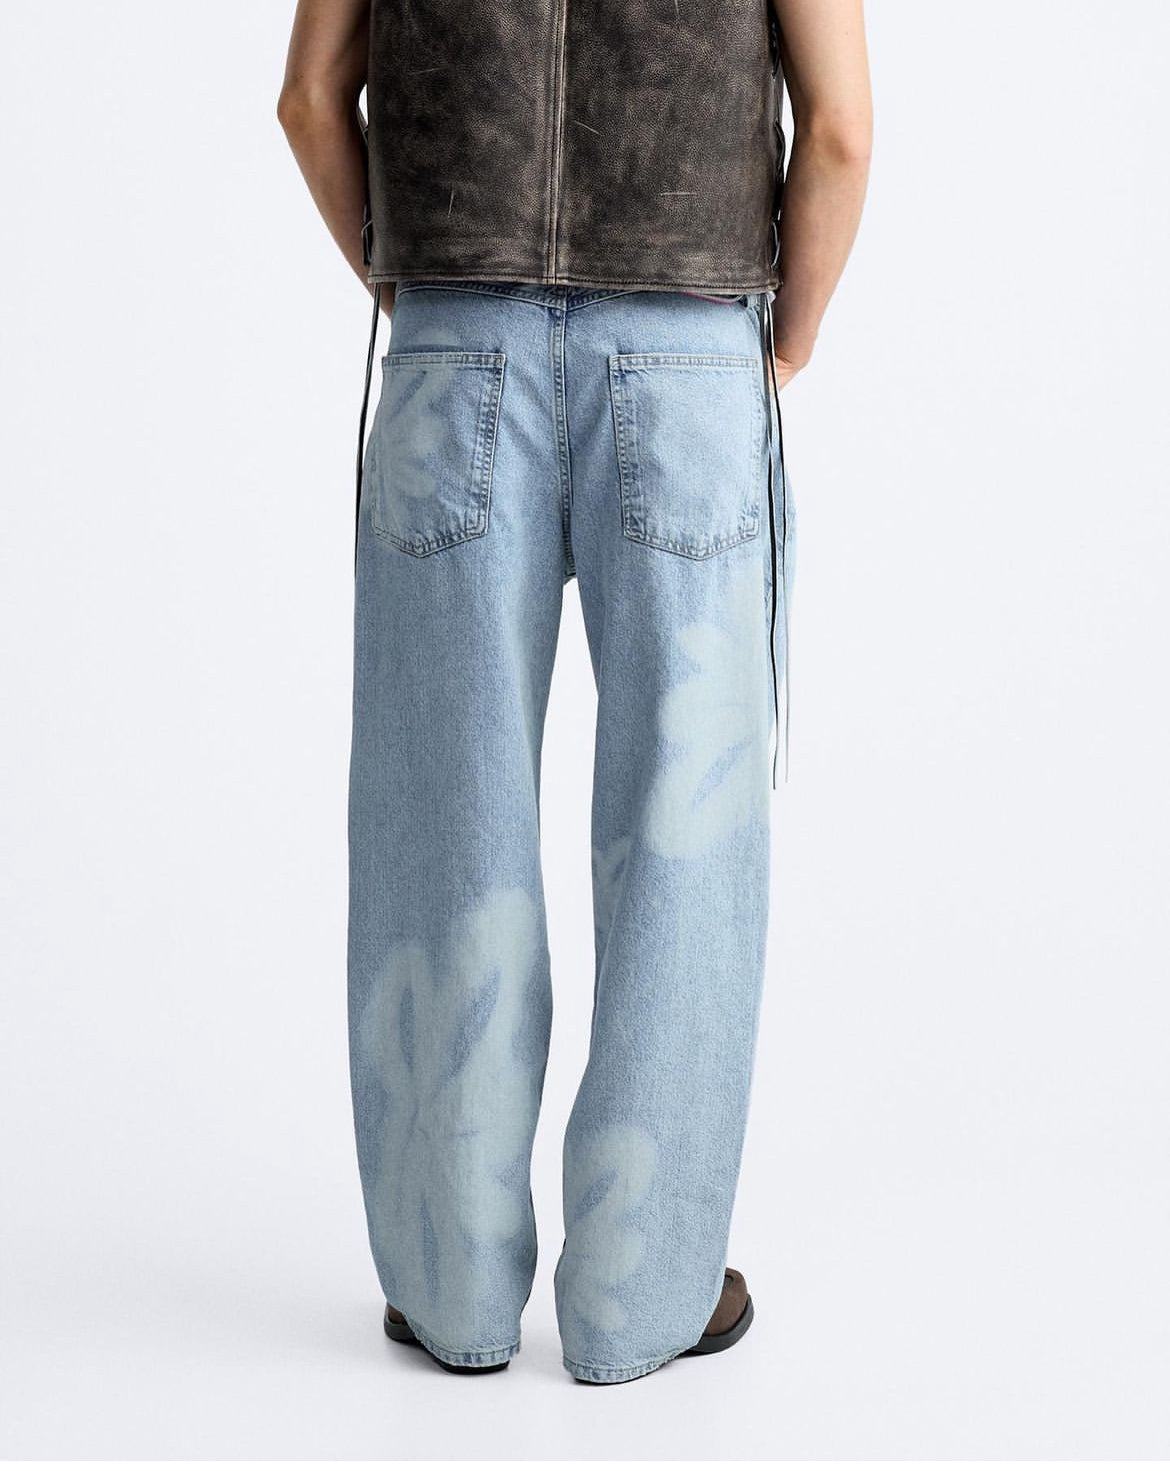 Zara floral print baggy jeans